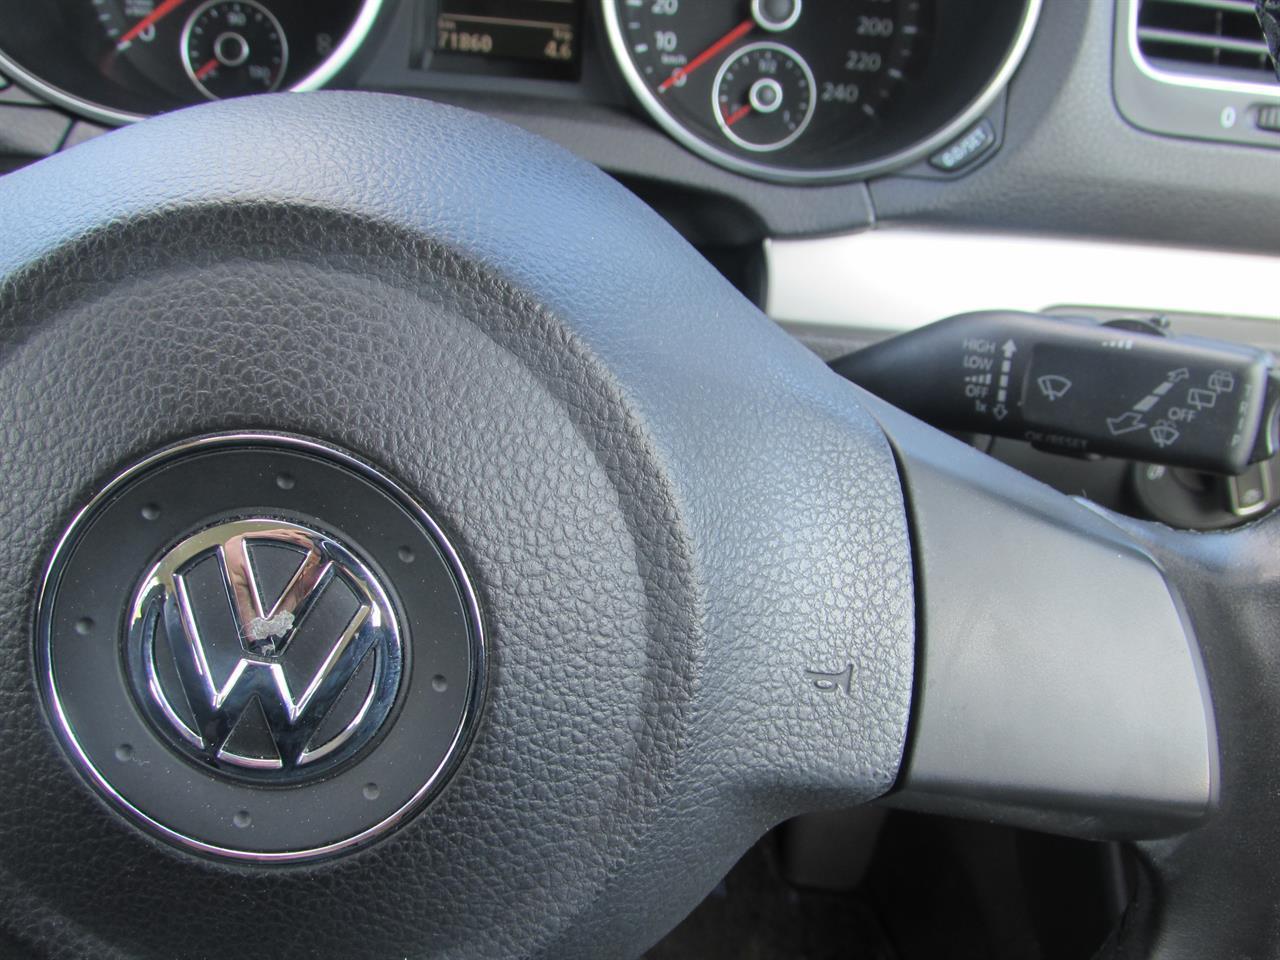 2012 Volkswagen GOLF only $47 weekly